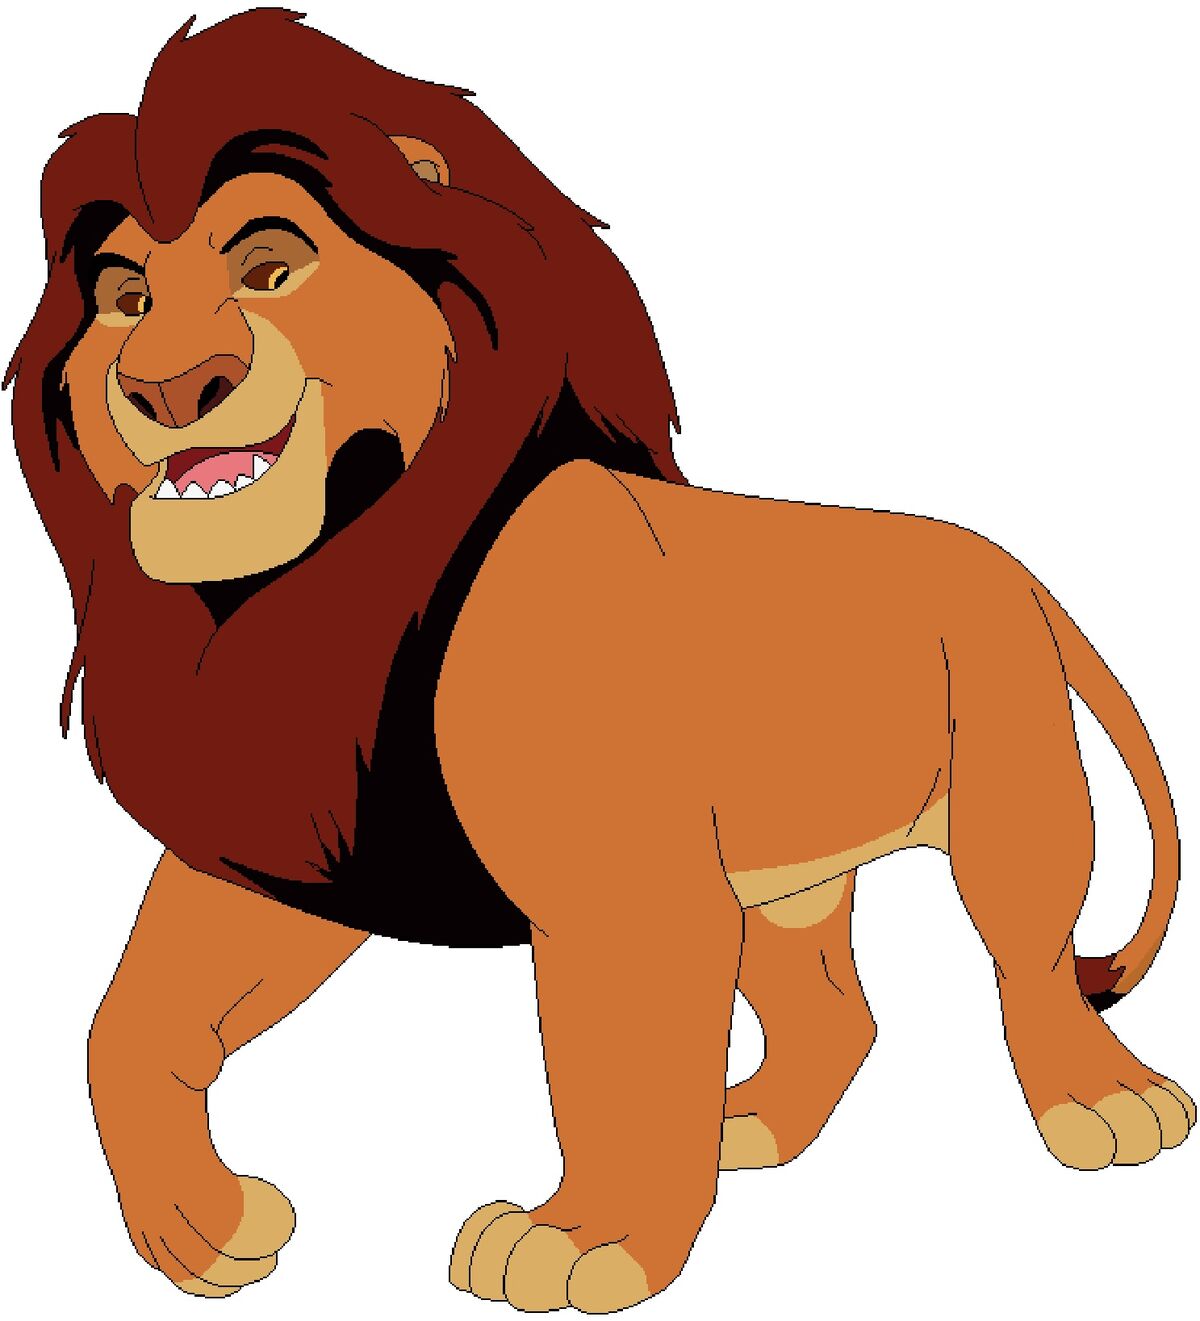 Macheo | The lion guard season 4 Wiki | Fandom